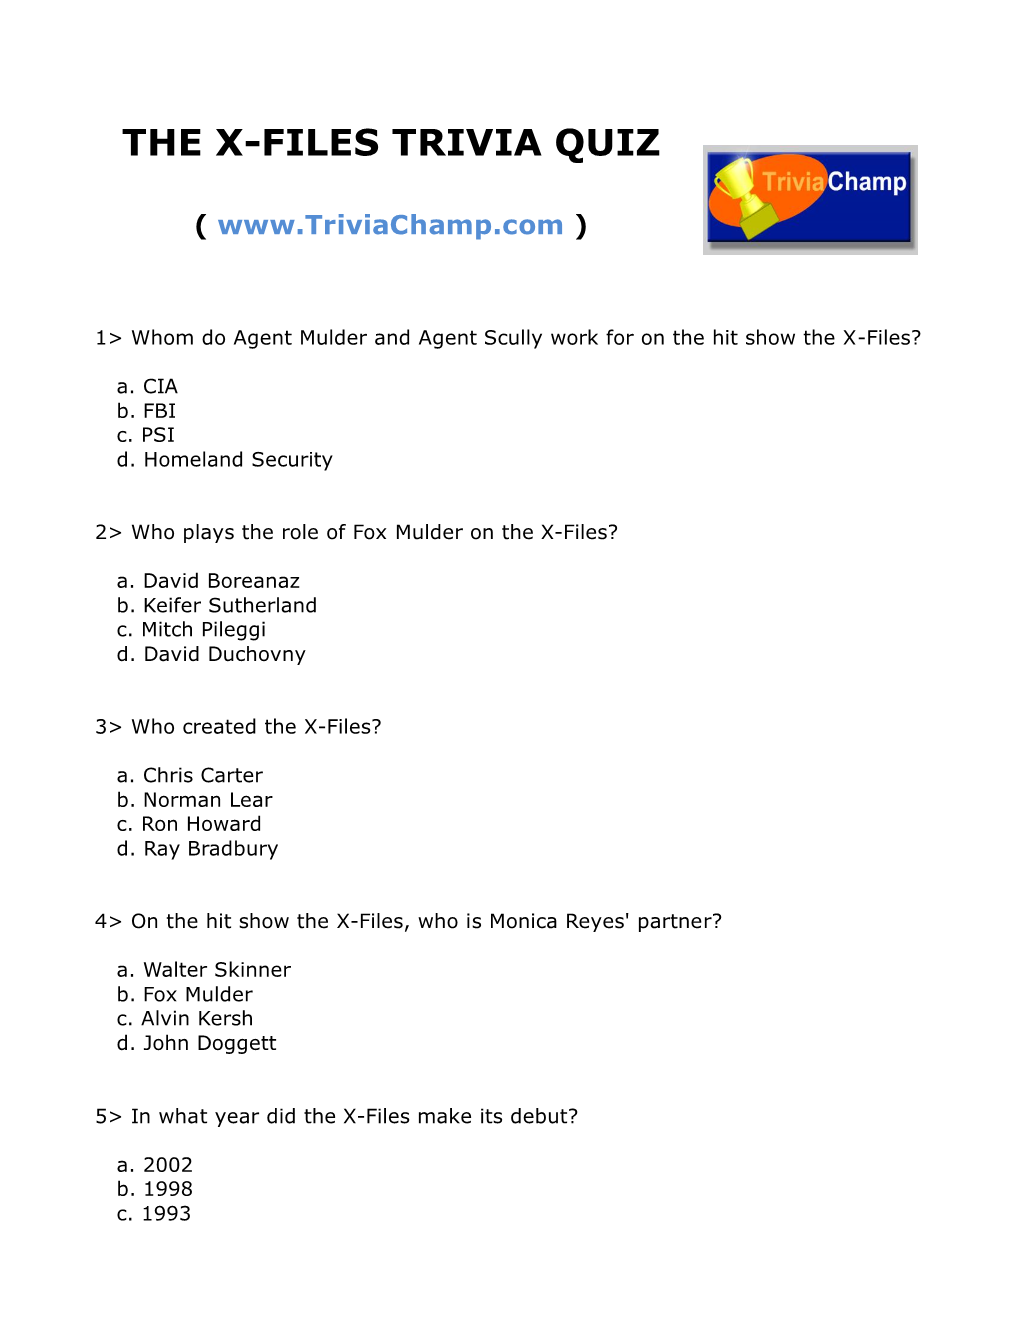 The X-Files Trivia Quiz